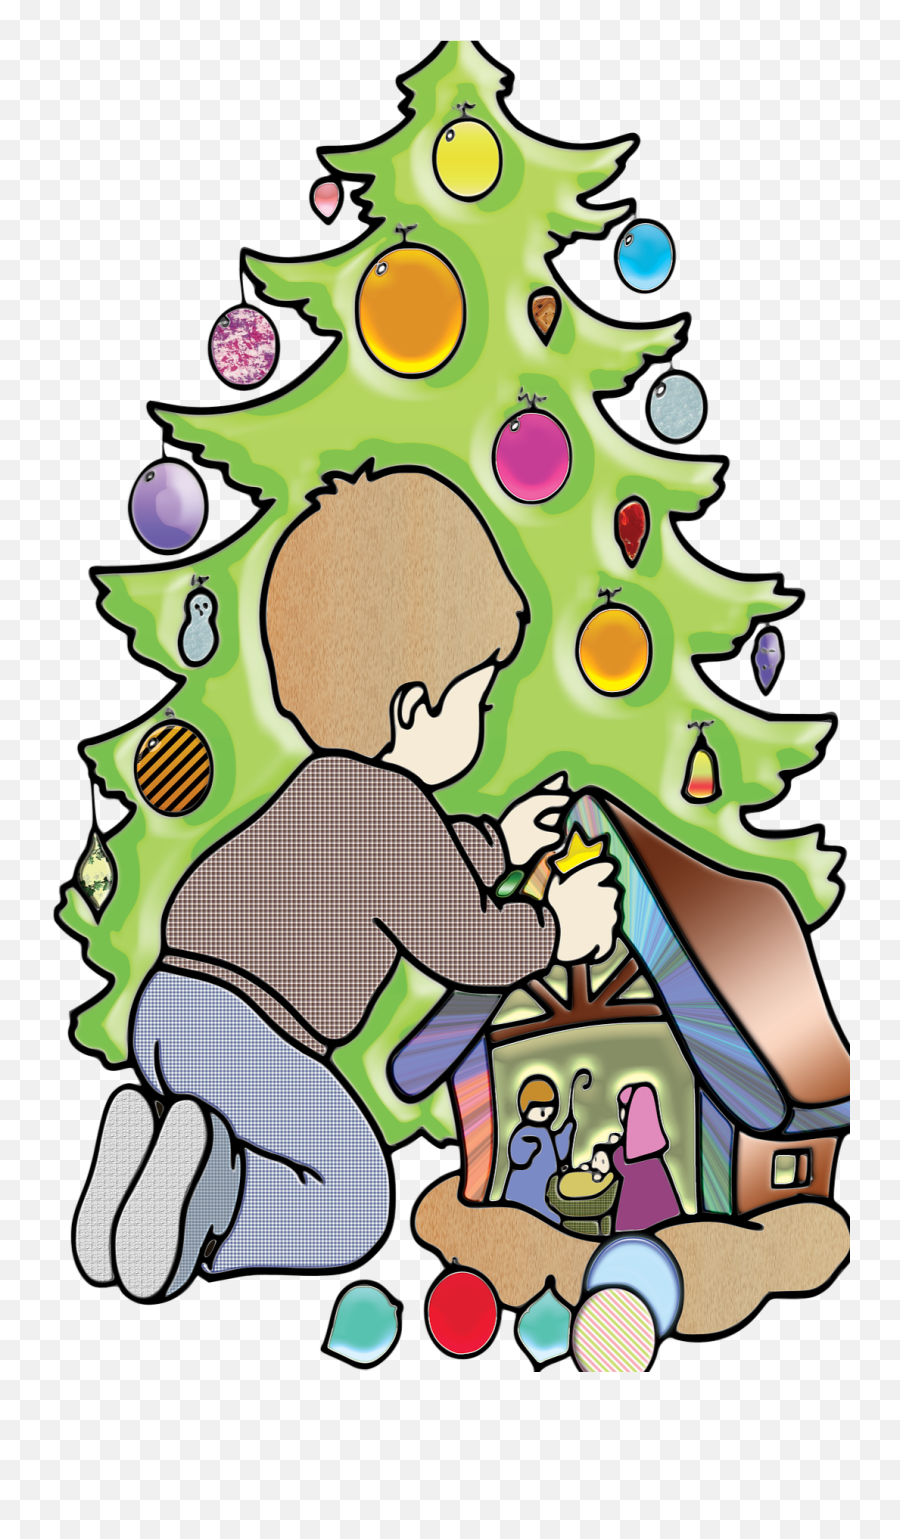 Il Natale By Maria D On Genially - Christmas Day Emoji,Christmas Ornament Emotions